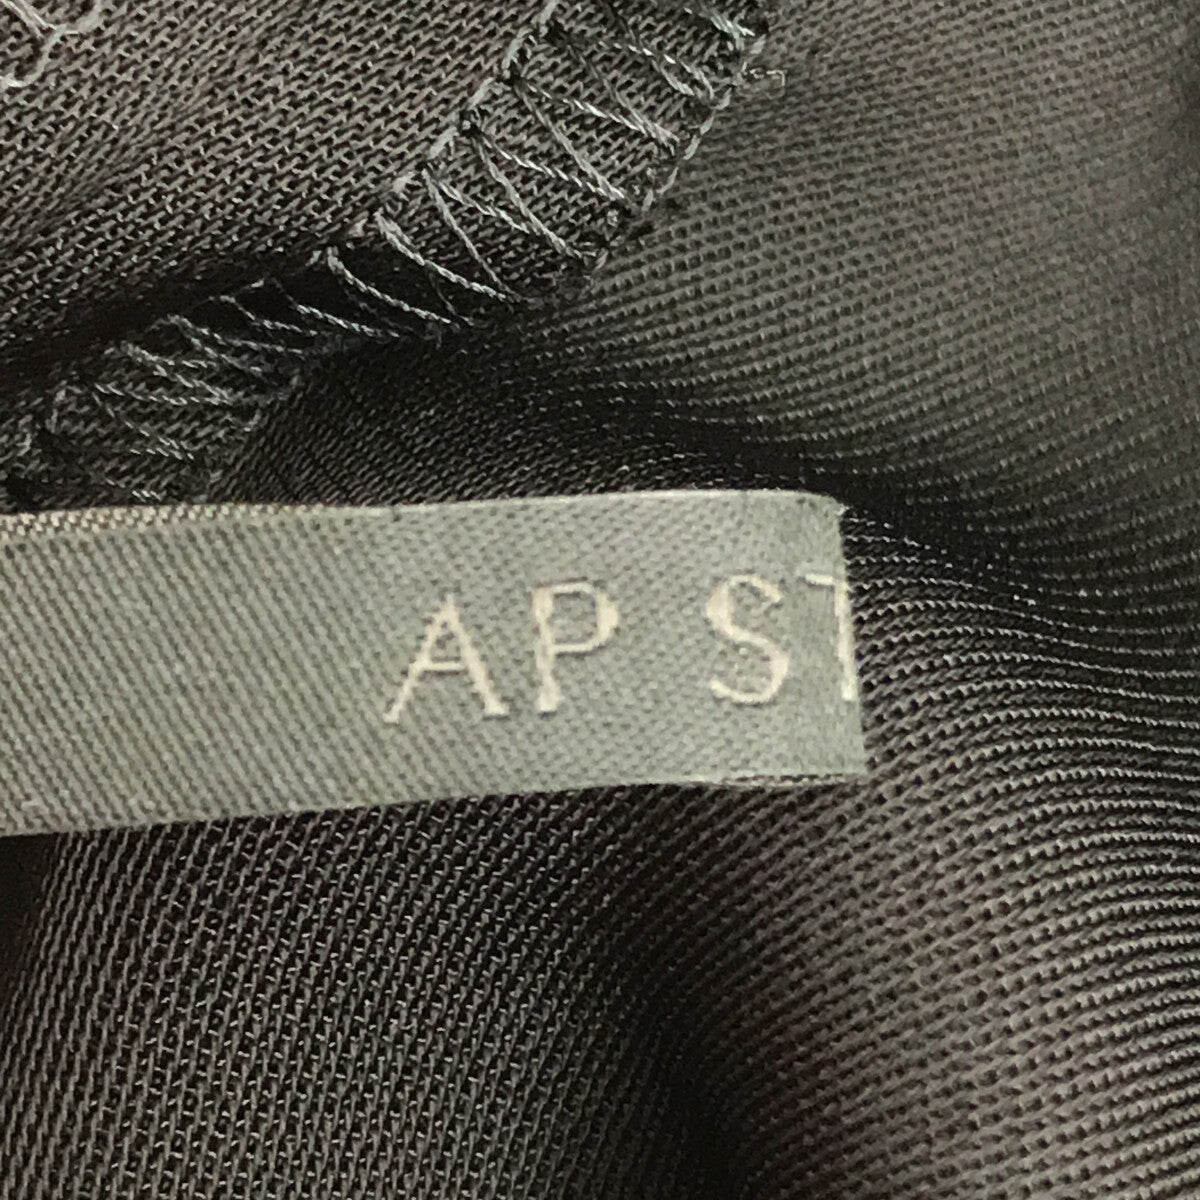 AP STUDIO / エーピーストゥディオ | Deuxieme Classe取扱い Jump Suit オールインワン | 38 |